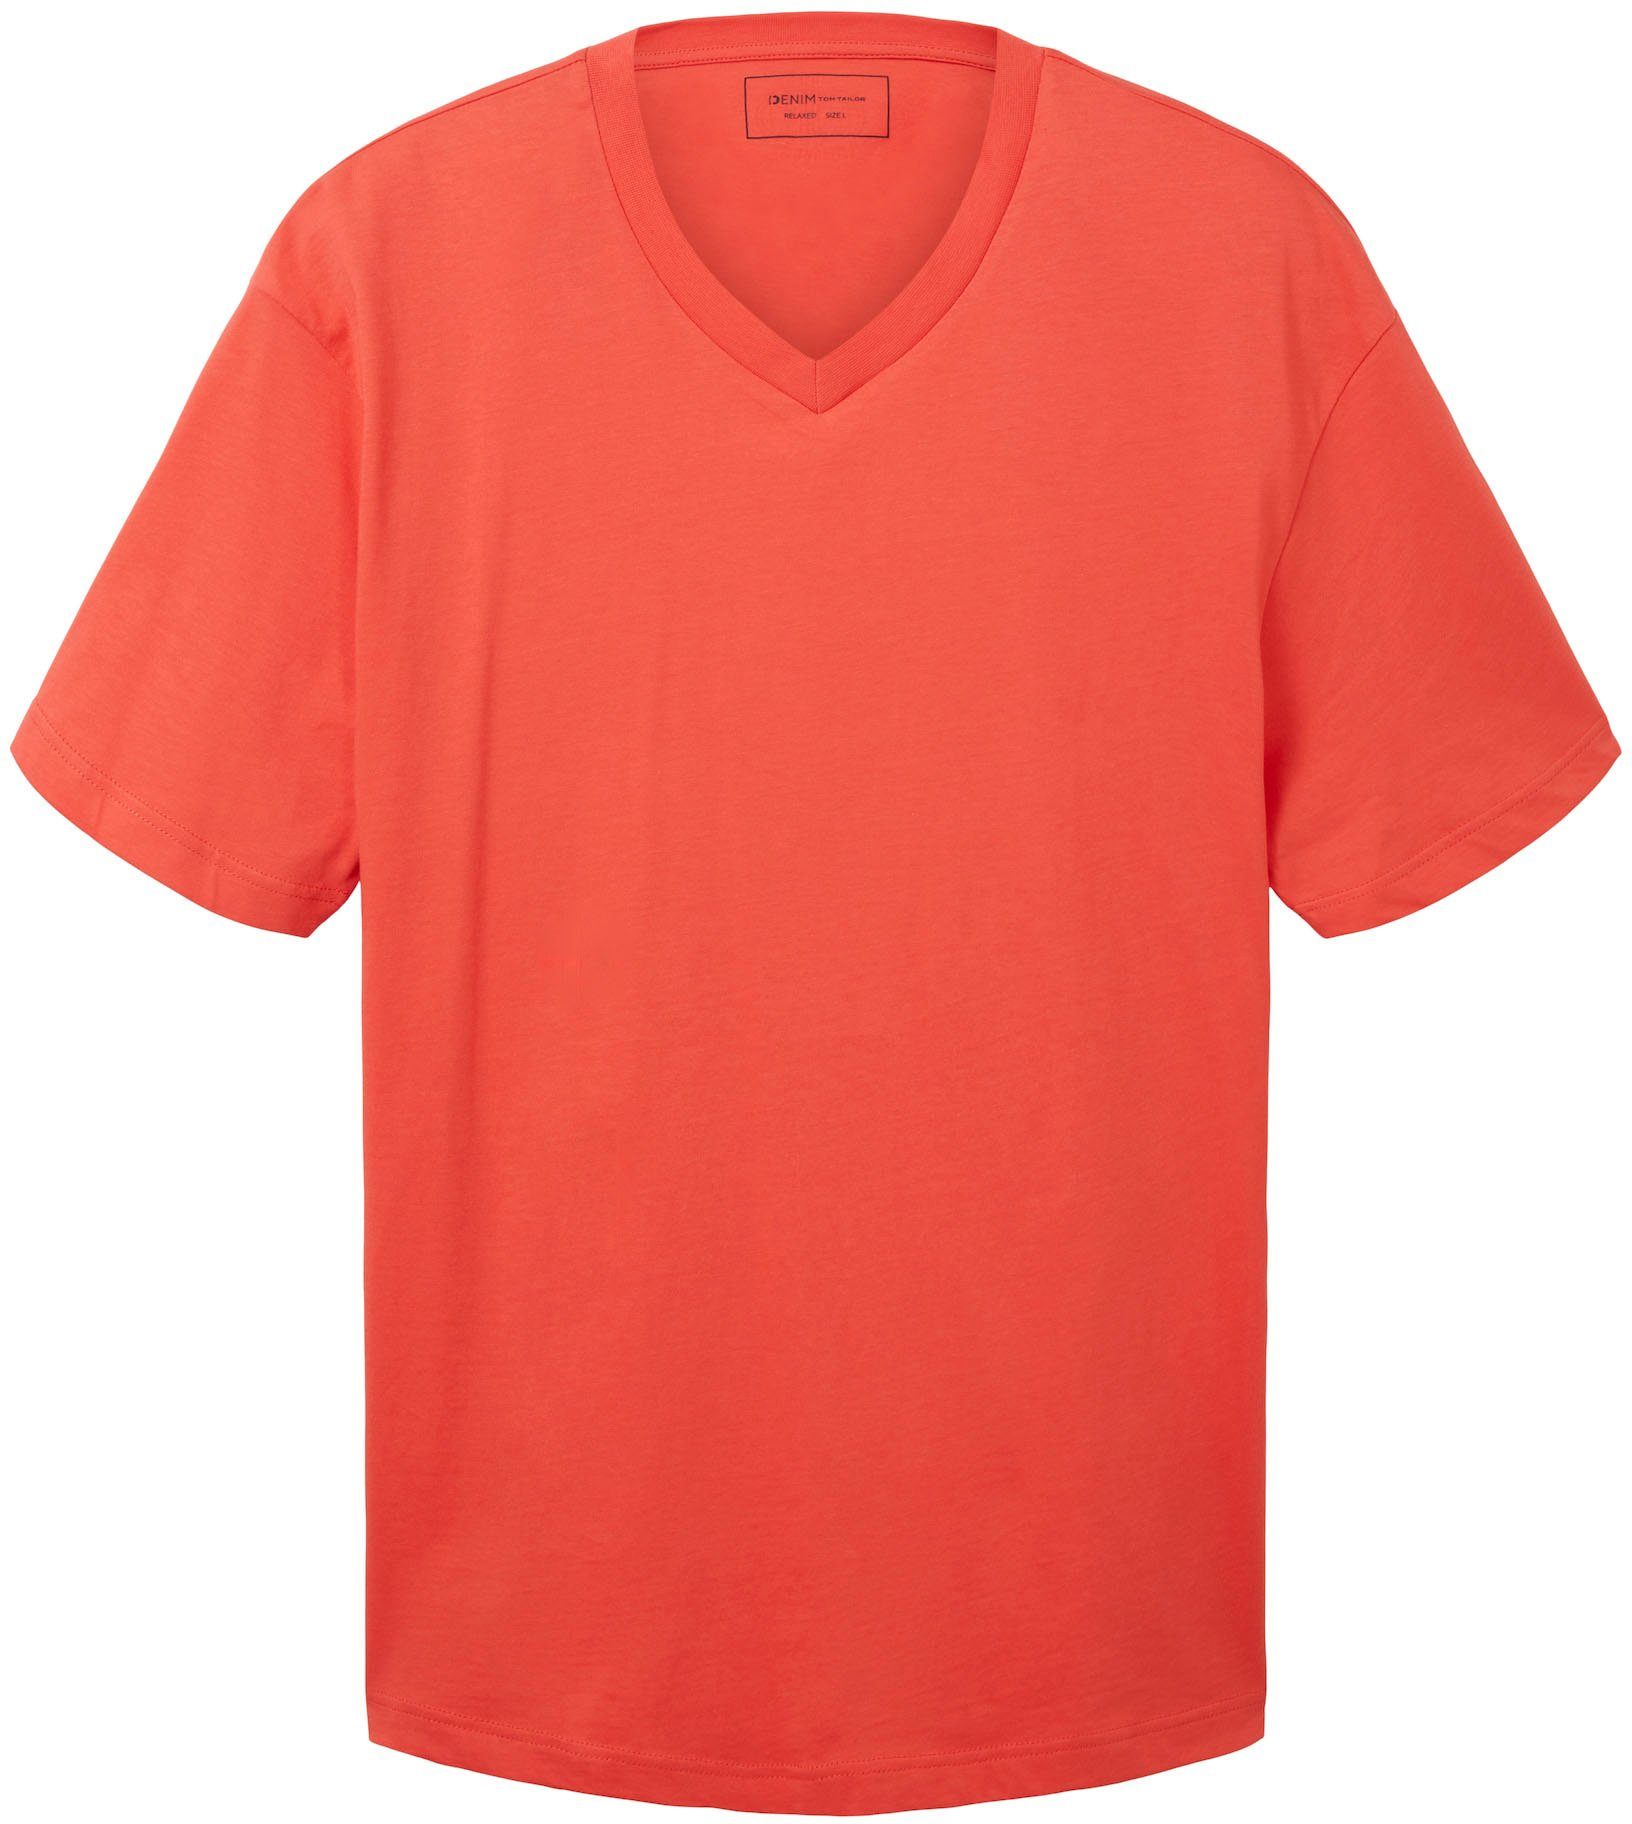 TOM TAILOR Denim T-Shirt rot V-Ausschnitt mit abgerundetem